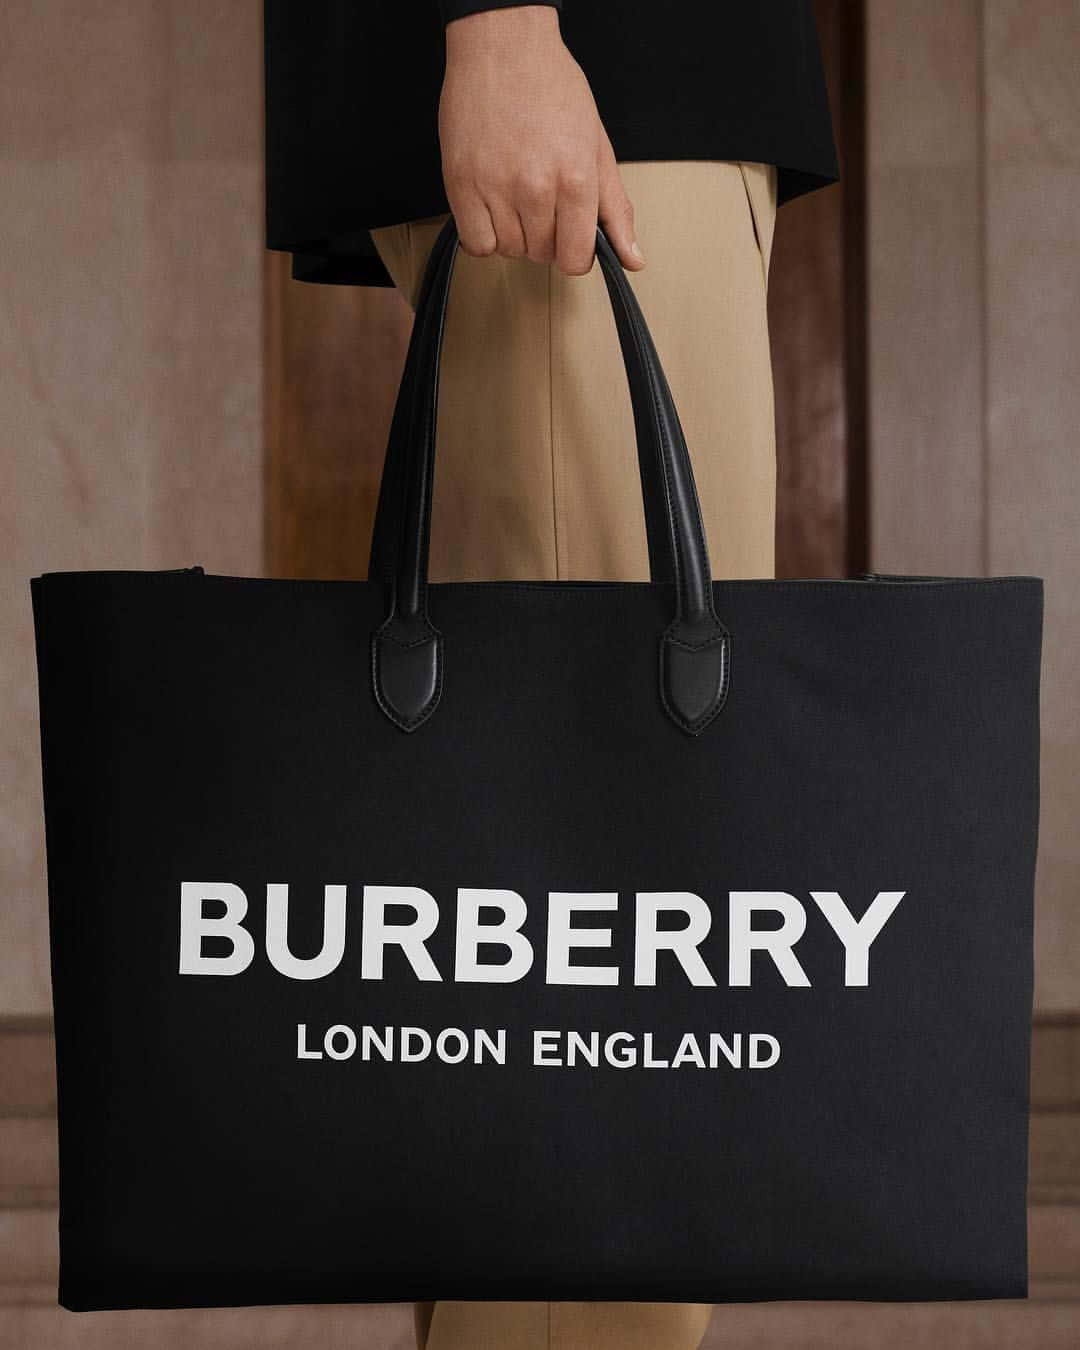 Burberry London England - London - London - Burberry London Eng